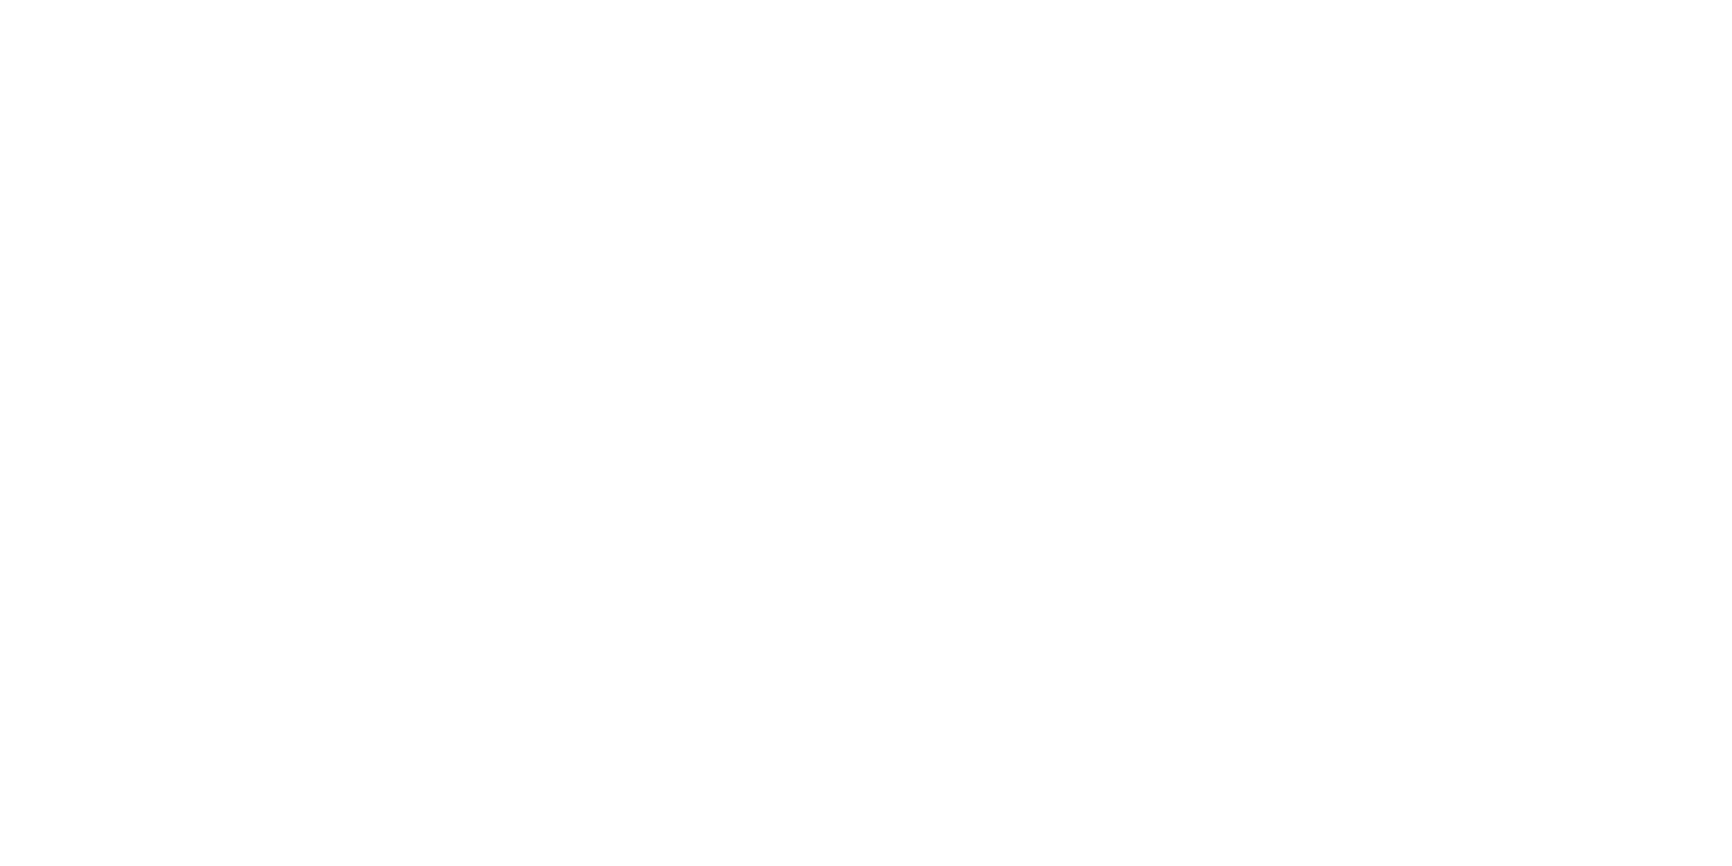 The Allstate Foundation logo